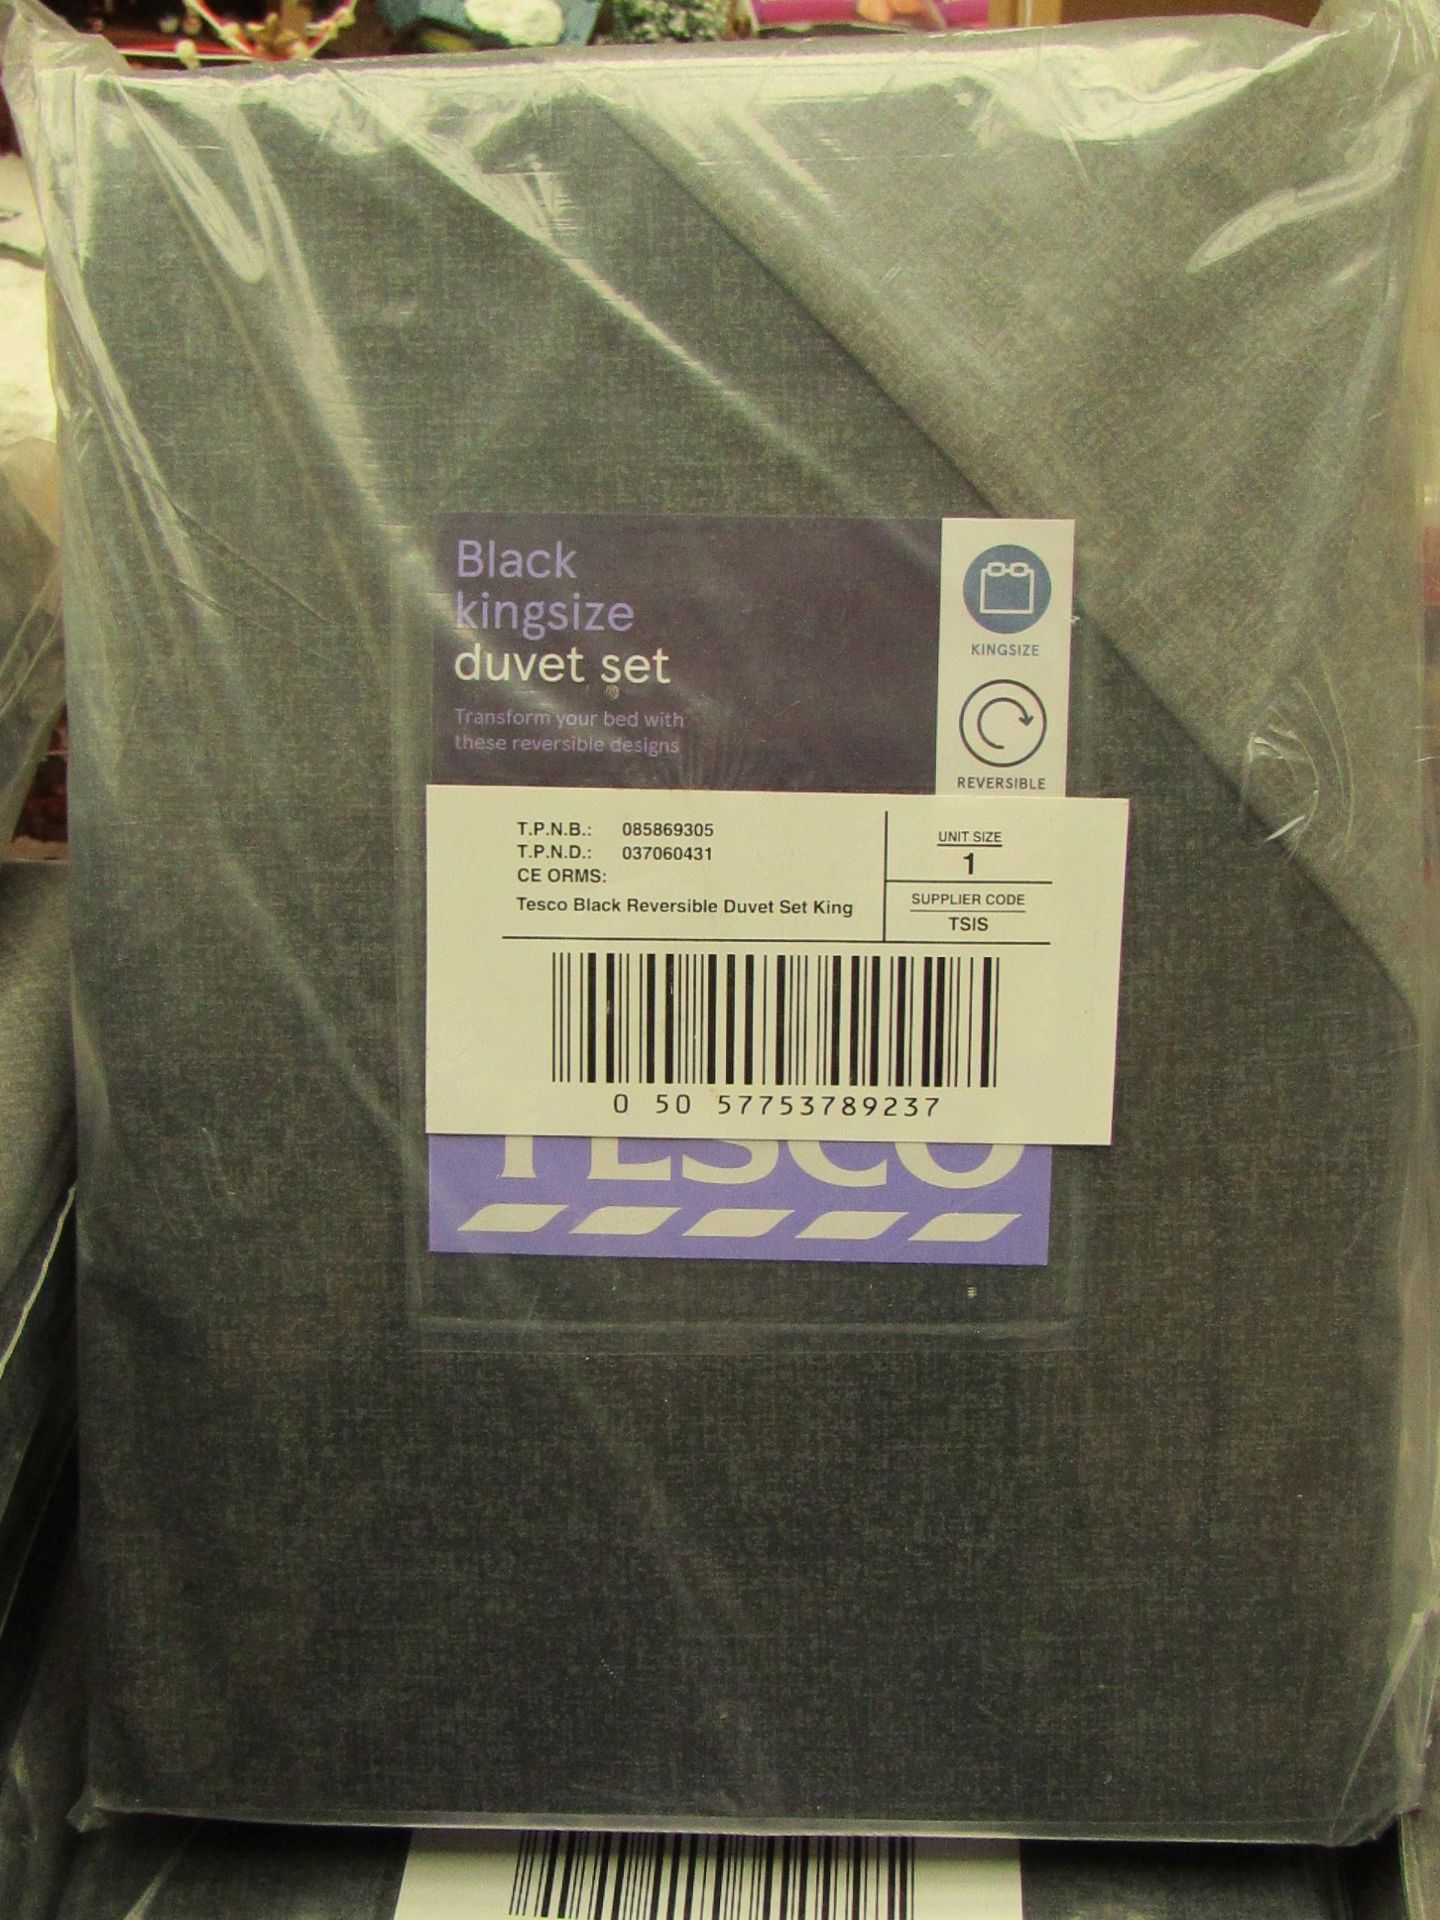 Tesco black double duvet set, size kingsize, new and packaged.